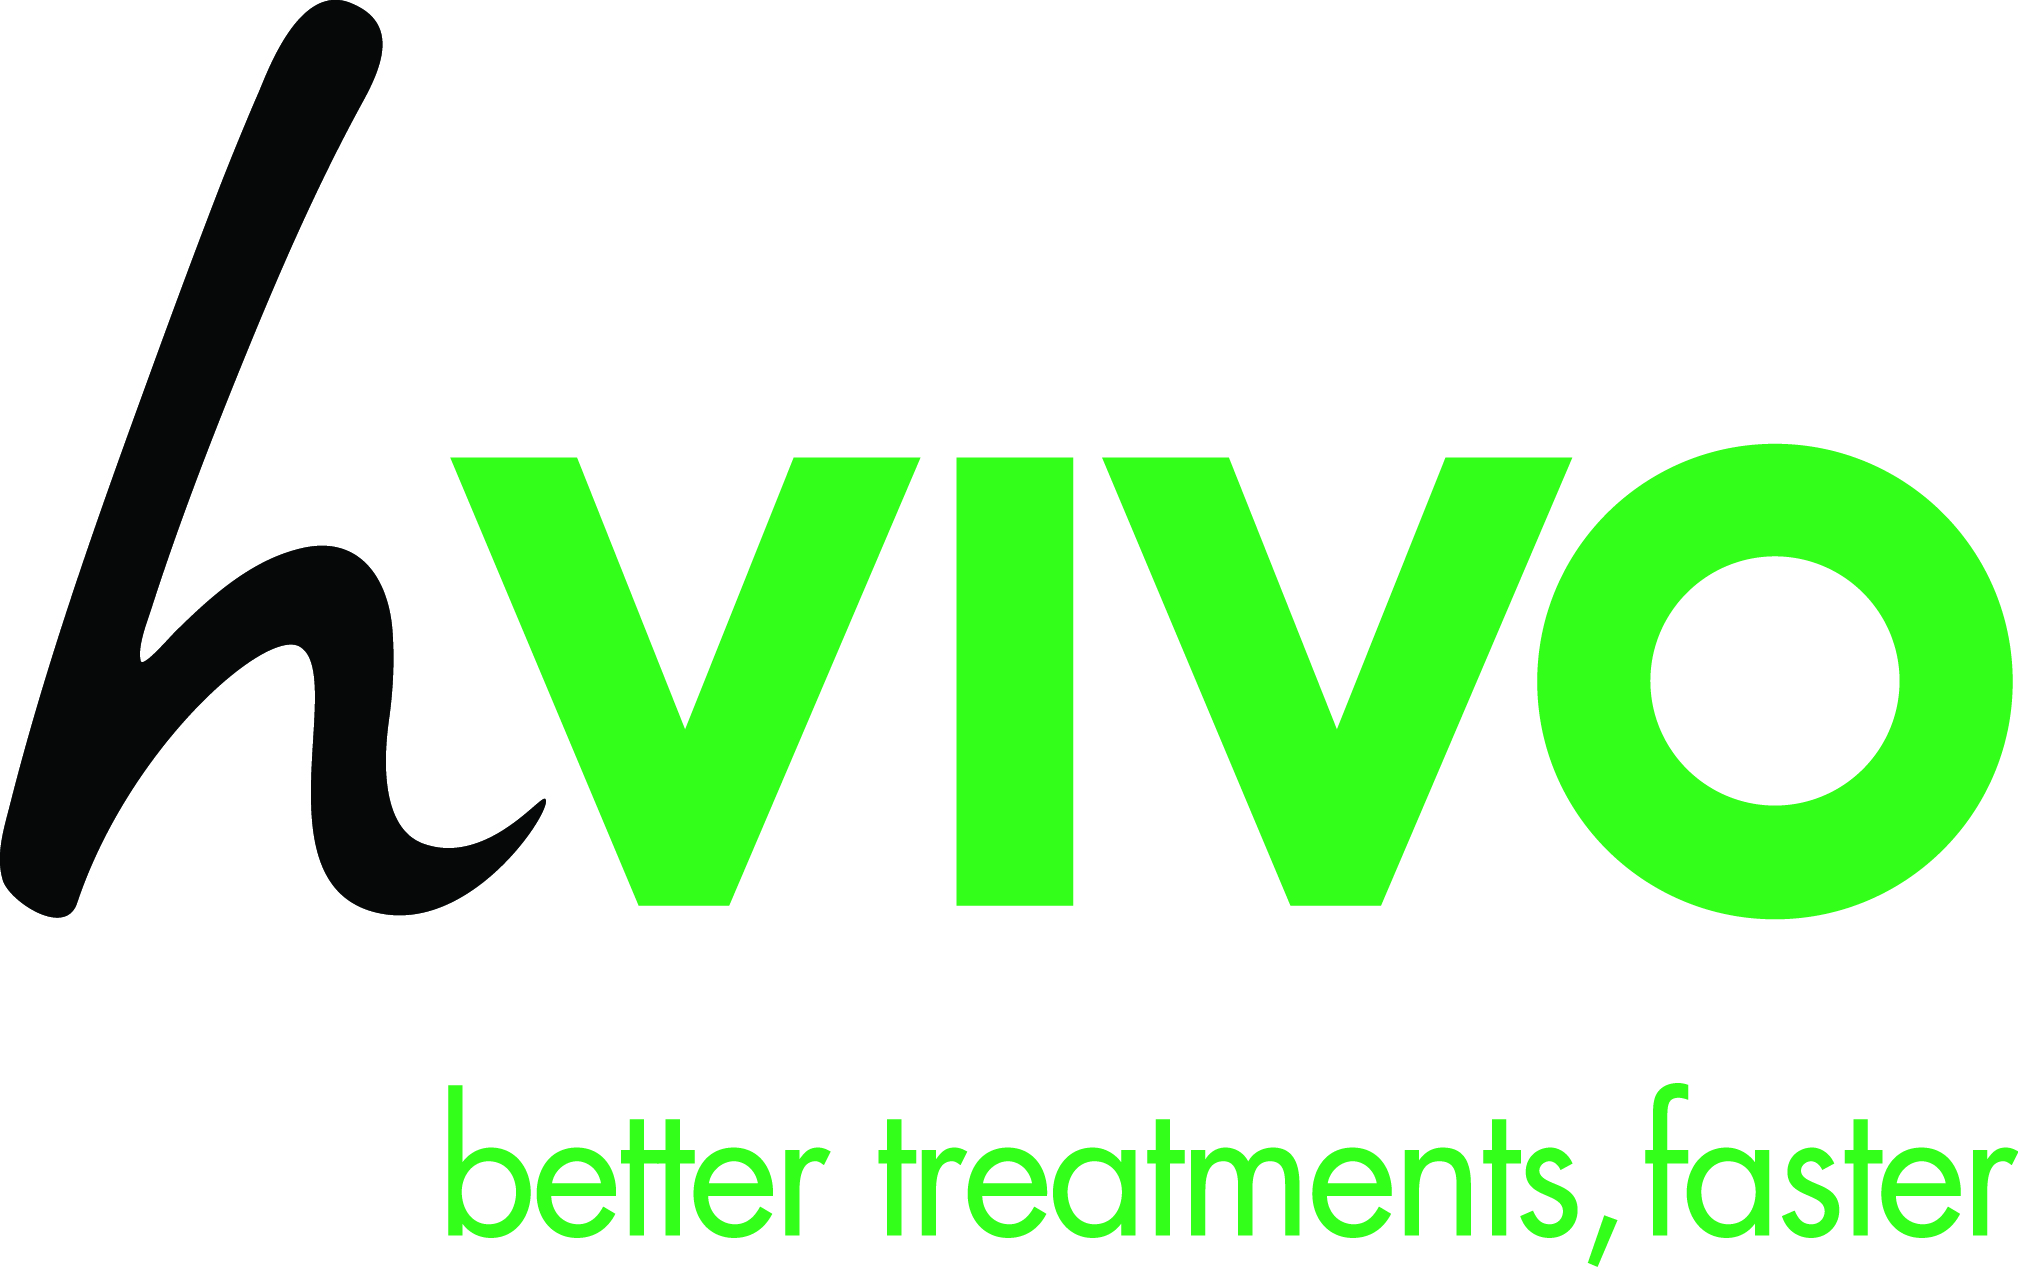 hVIVO logo jpeg April 2015